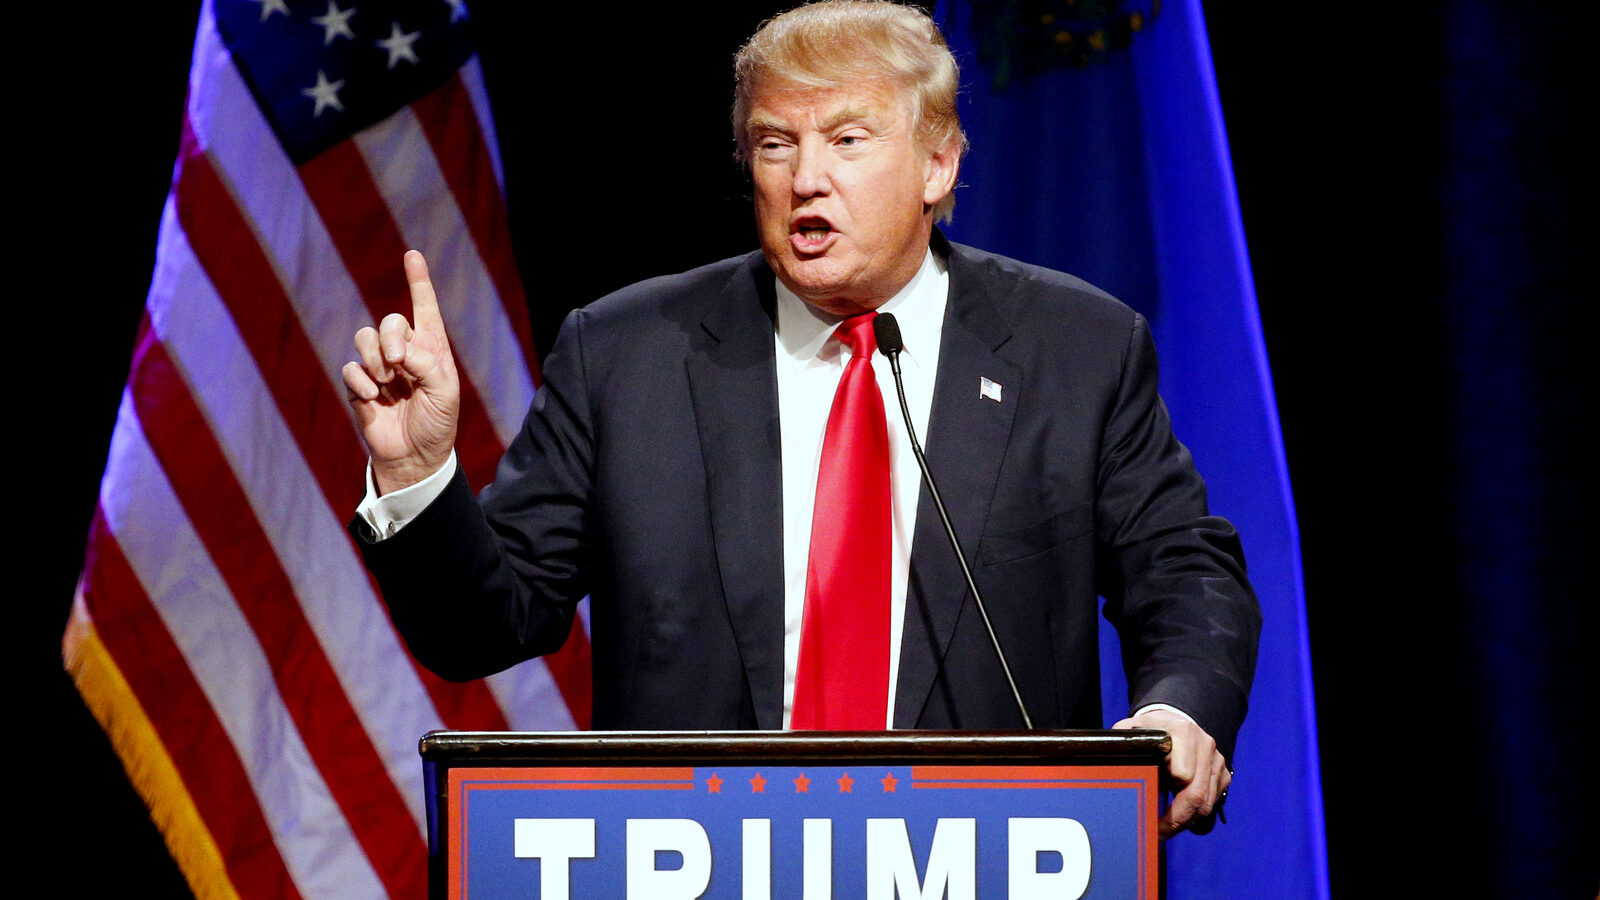 Republican presidential candidate Donald Trump speaks at a rally Monday, Dec. 14, 2015, in Las Vegas. (AP Photo/John Locher)